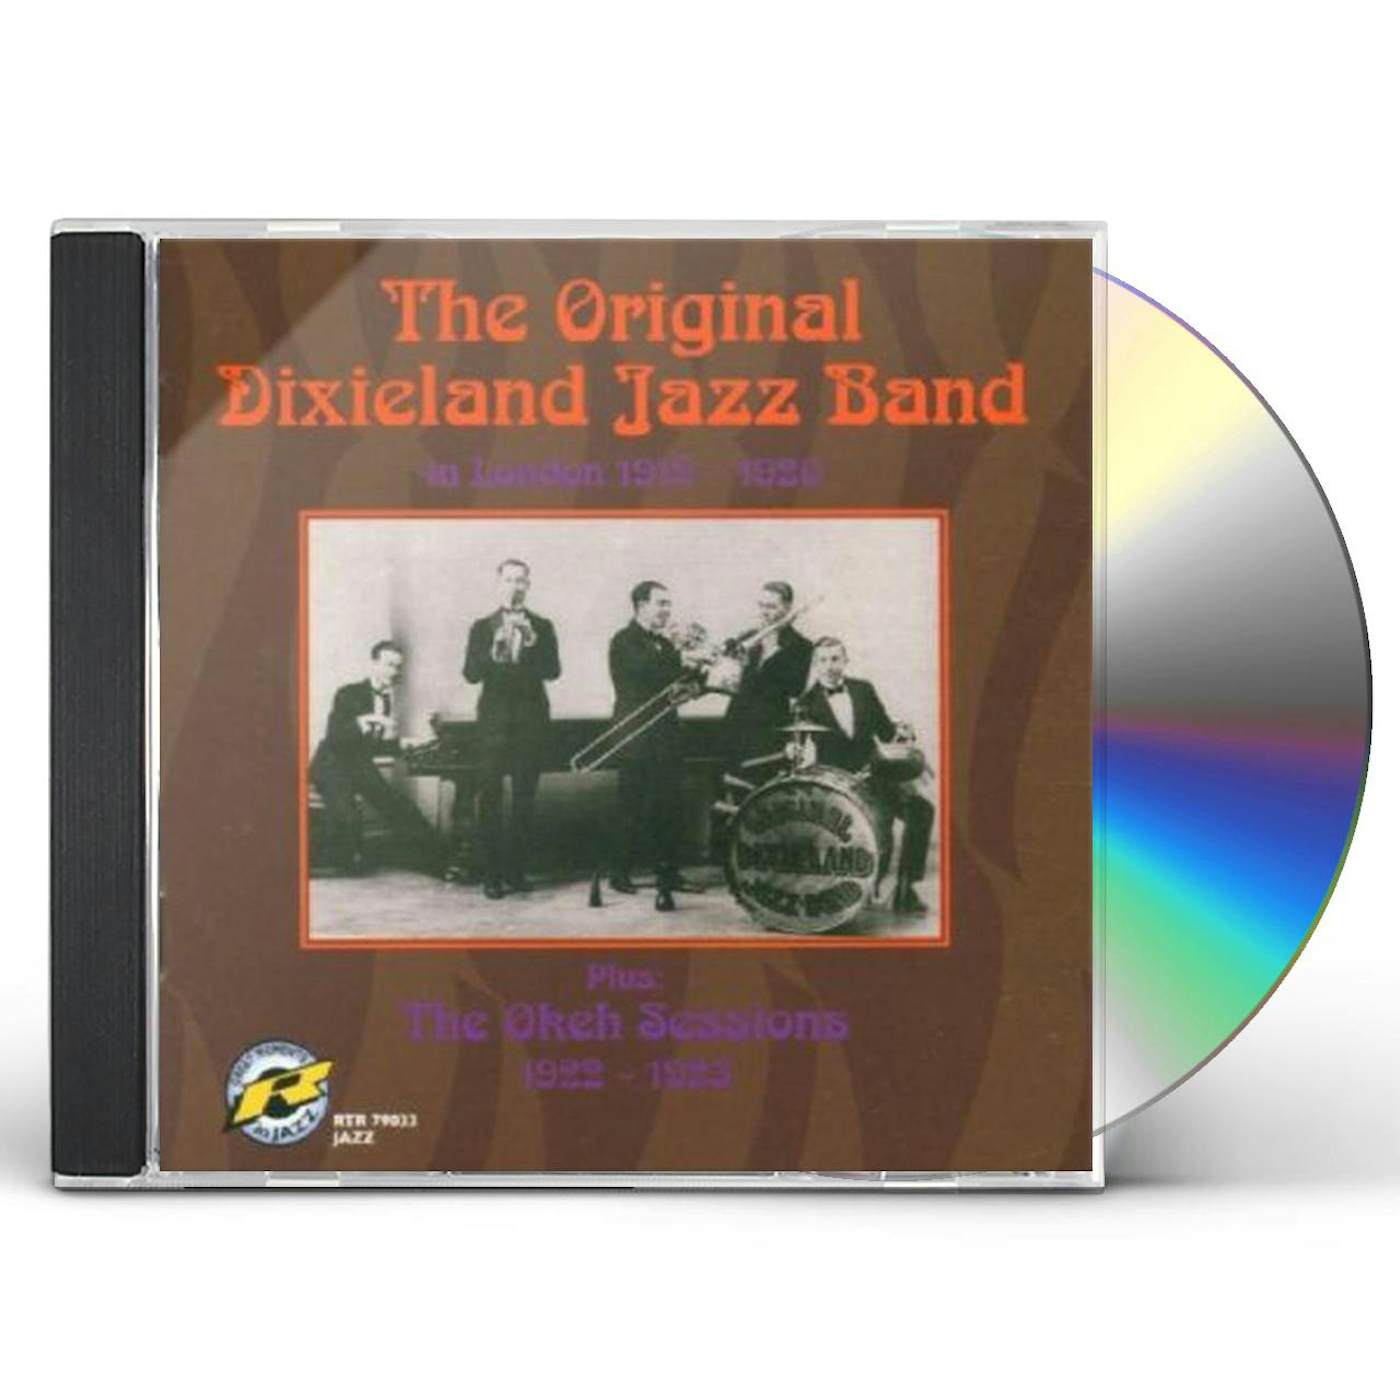 Original Dixieland Jazz Band IN LONDON 1919-1920 / OKEH SESSIONS 1922-1923 CD